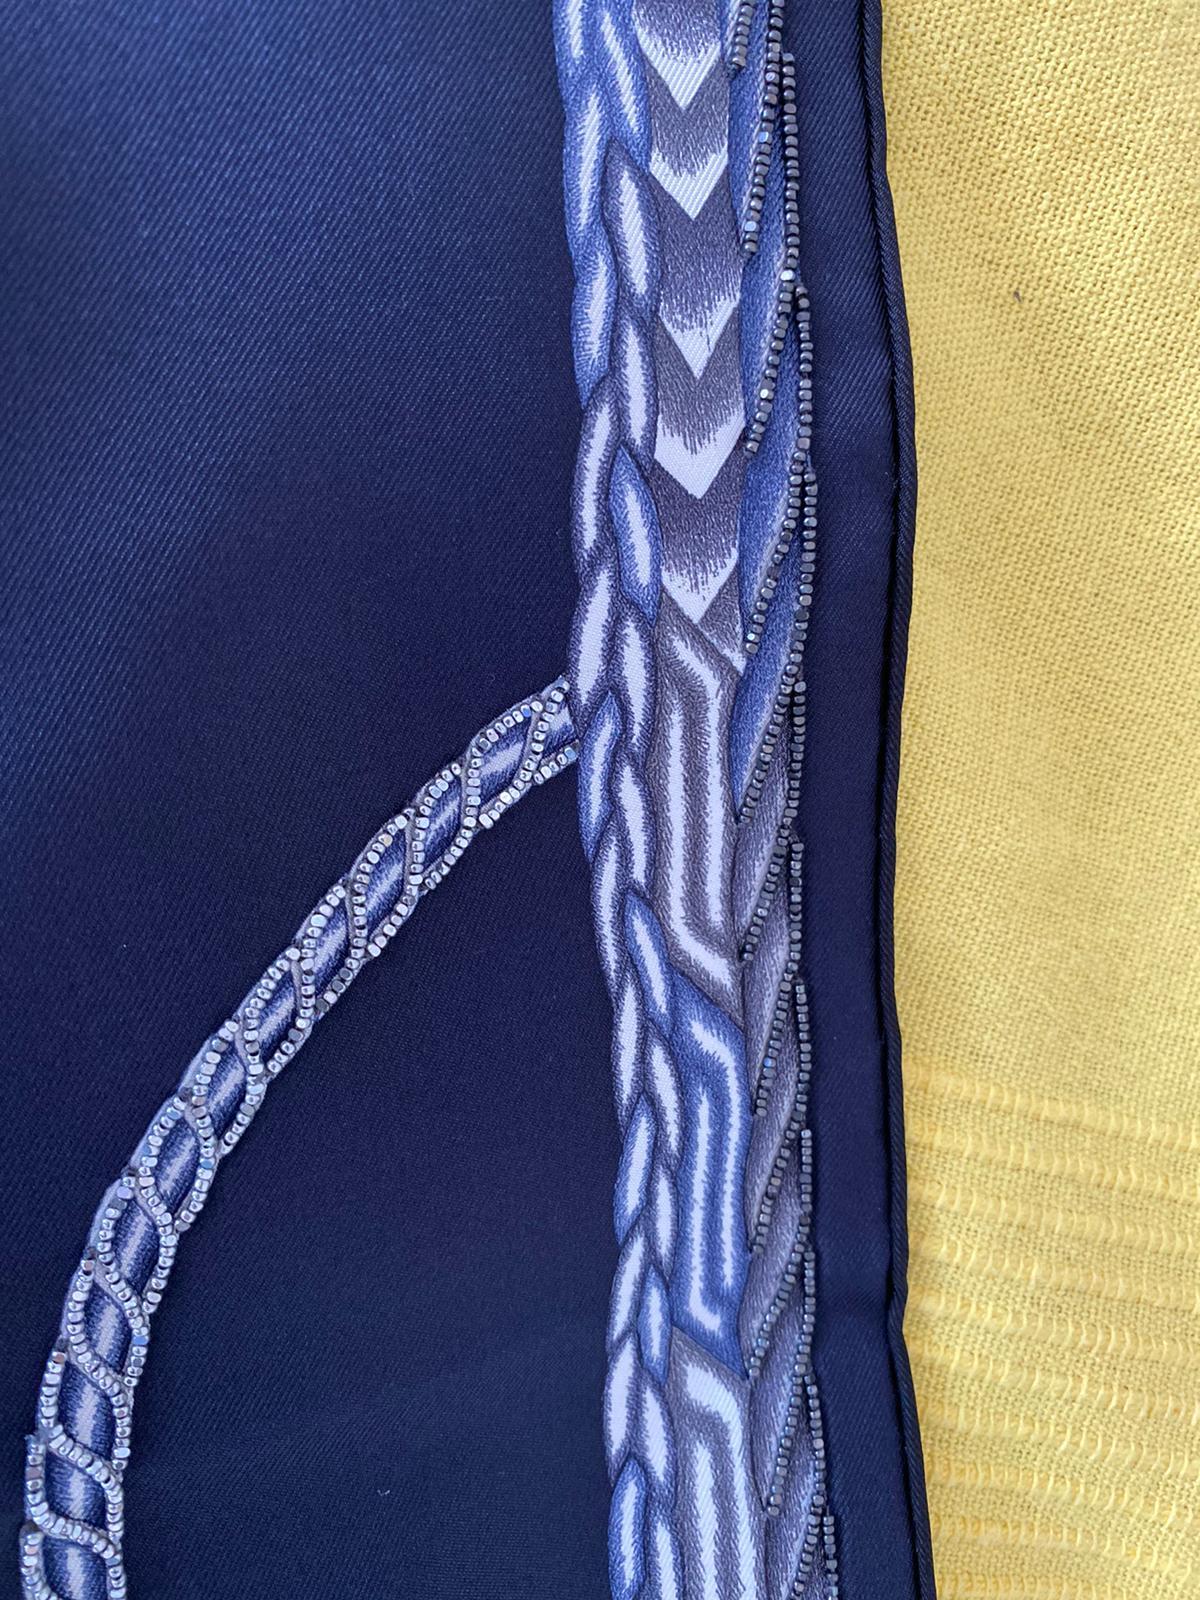 Hermès Silk Embroidered Scarf Robe du Soir Marine Blanc Manlik 2018 90 cm GRAIL 9